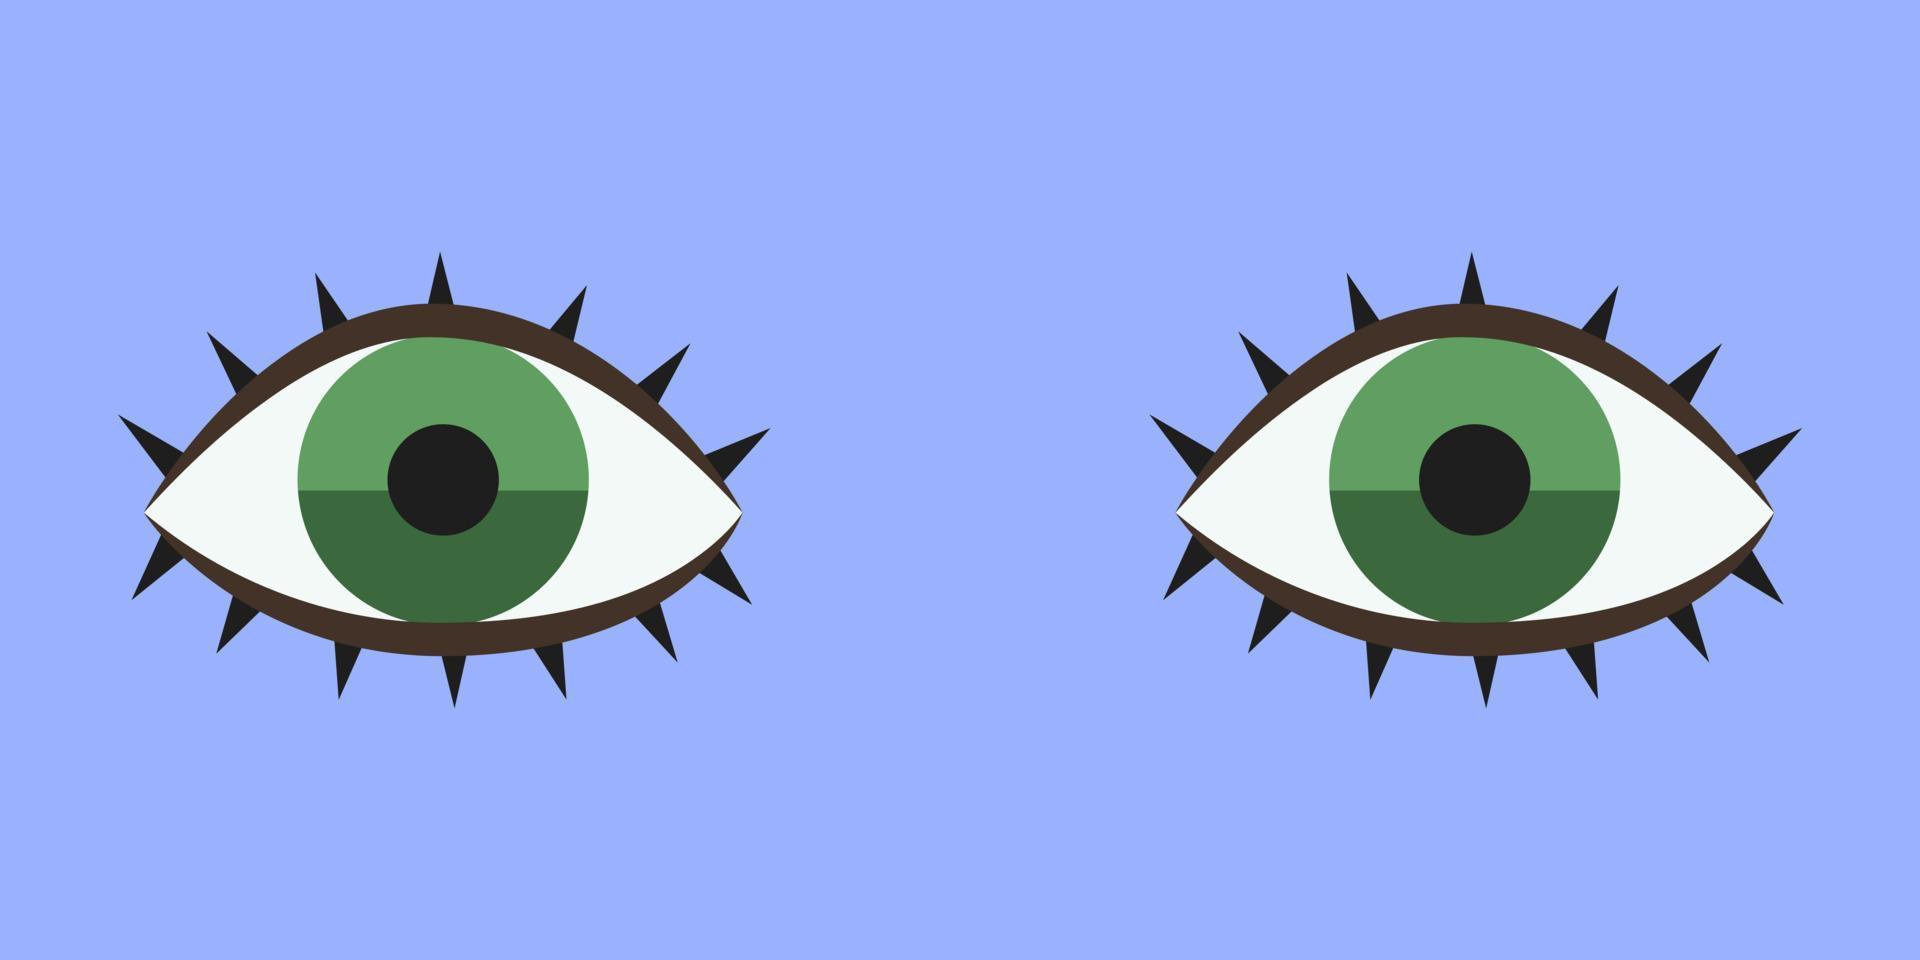 olhos verdes em estilo simples. vetor